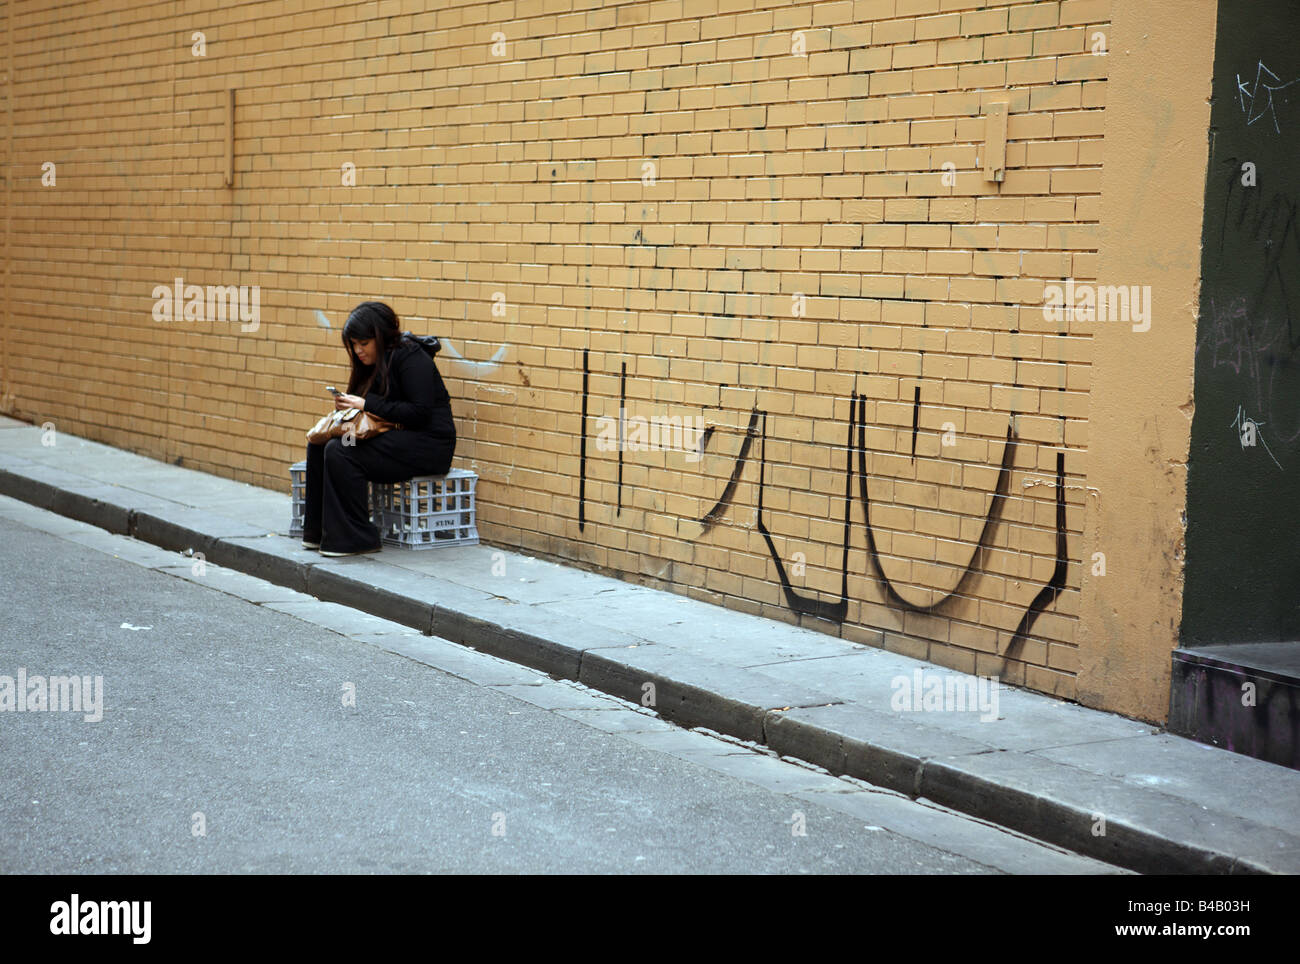 Arabic graffiti in sidestreet in Melbourne. Stock Photo